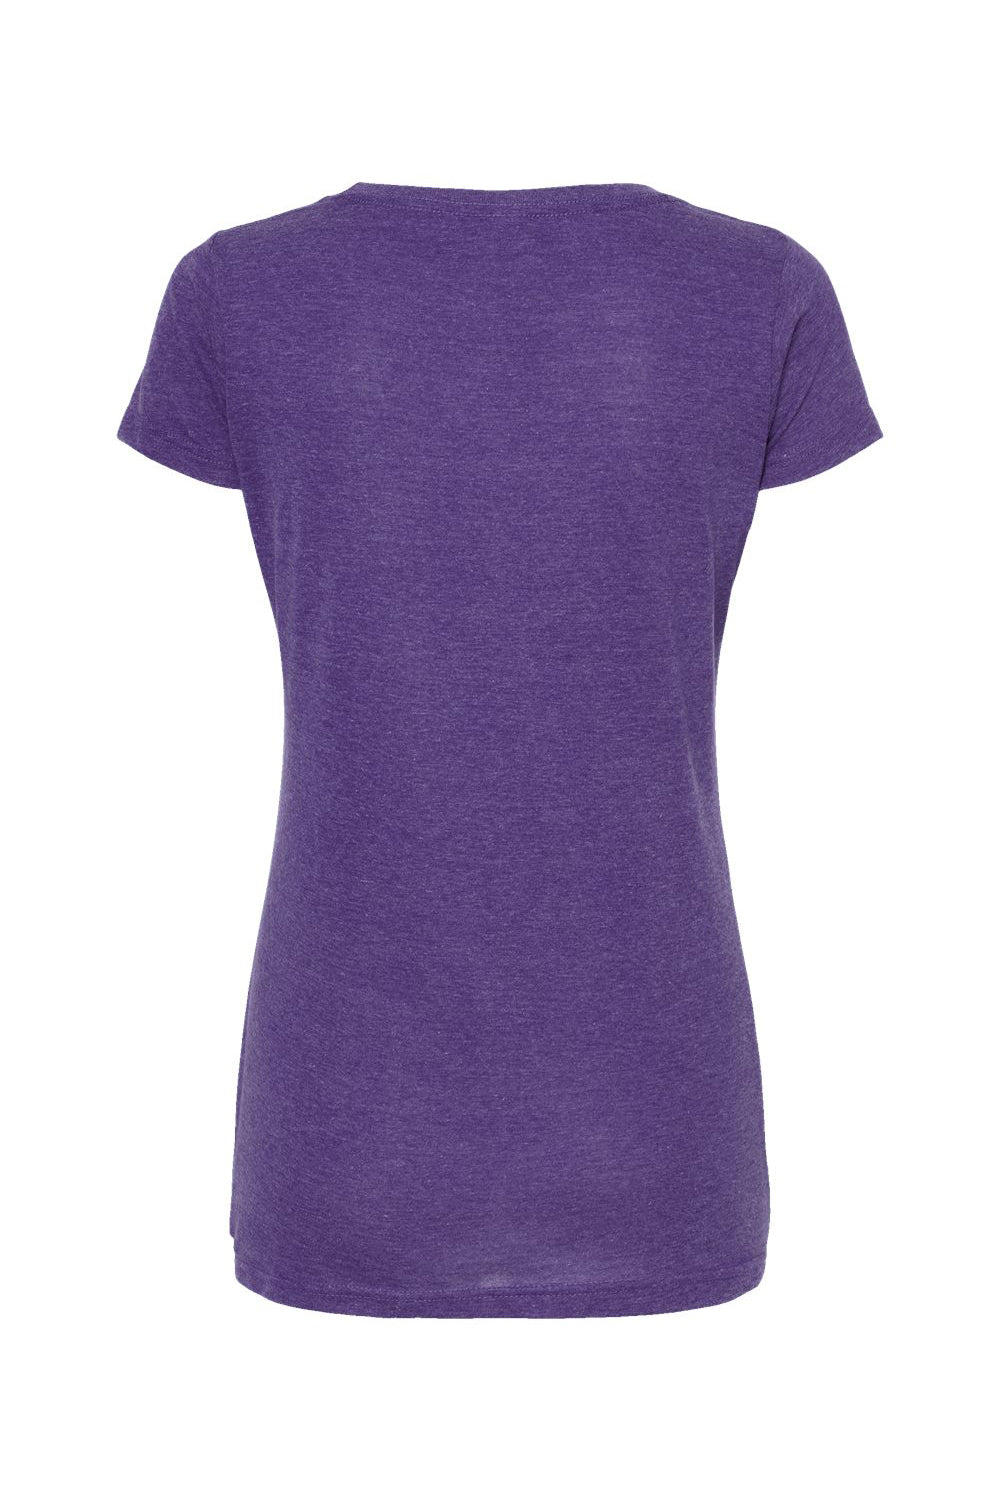 Tultex 243 Womens Poly-Rich Short Sleeve Scoop Neck T-Shirt Heather Purple Flat Back